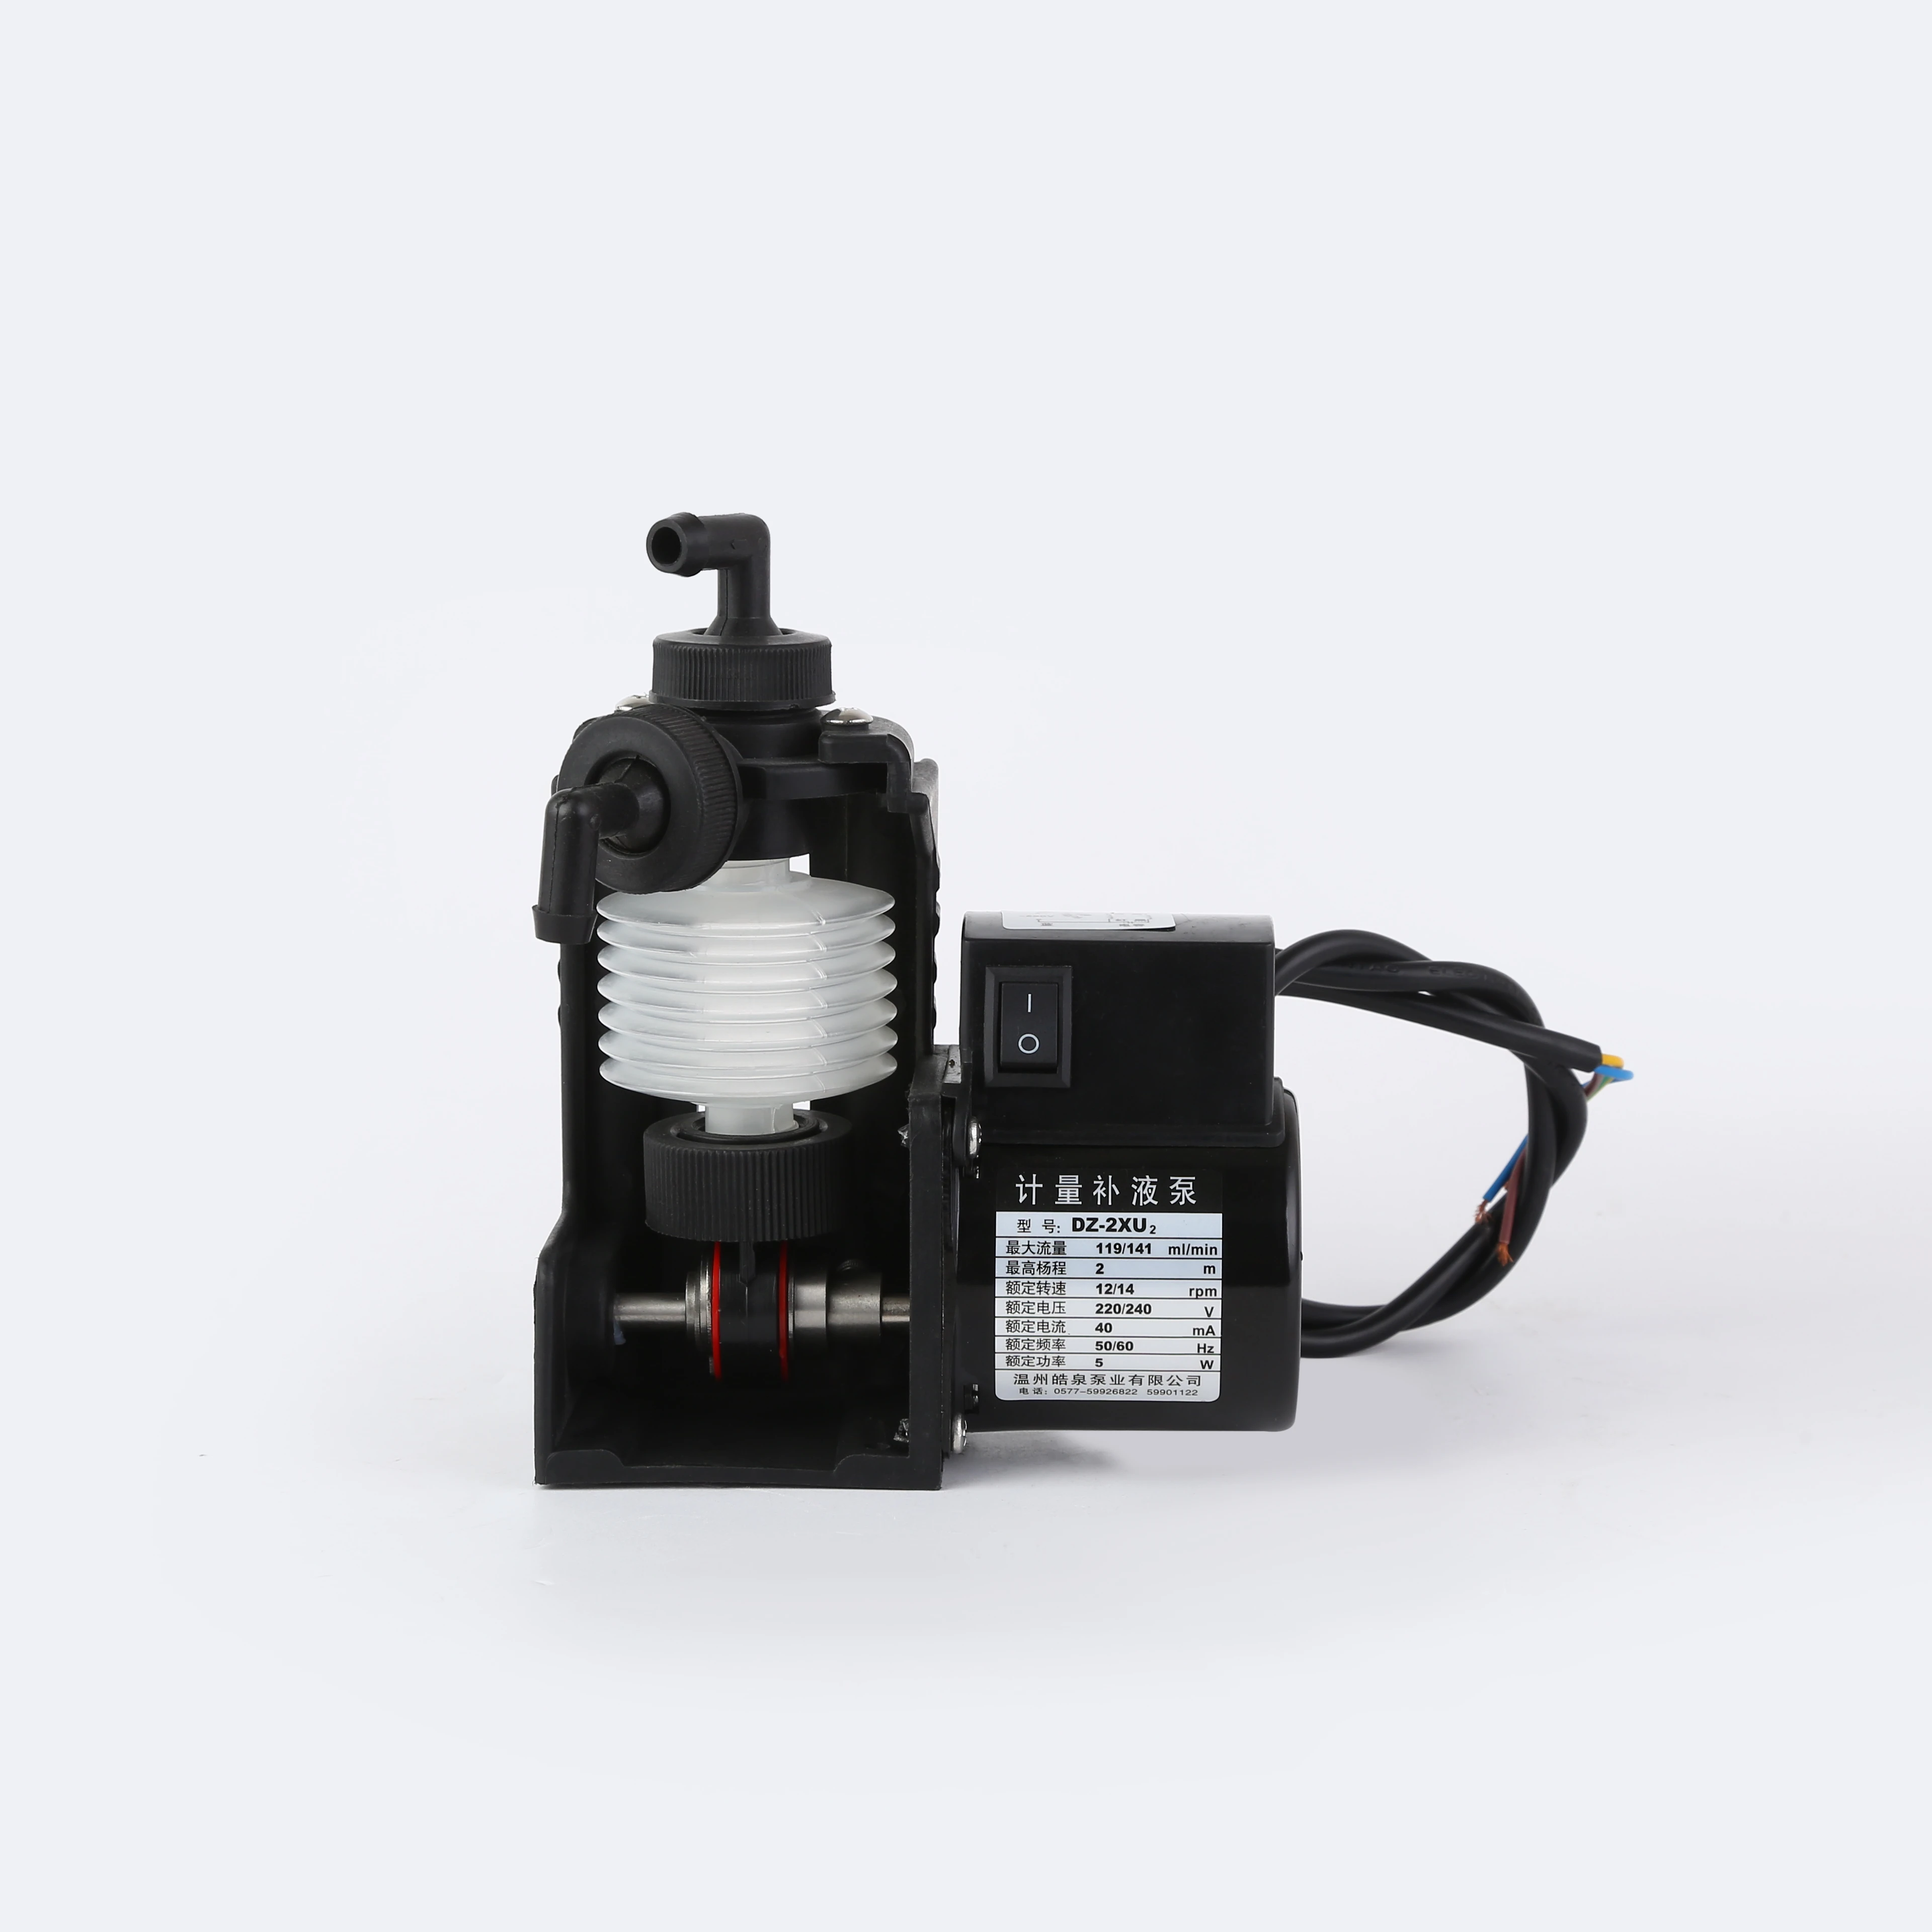 

Newest Customized Easy Operation Manufacturer's Warranty Bellows Metering Pump dz-2xu2